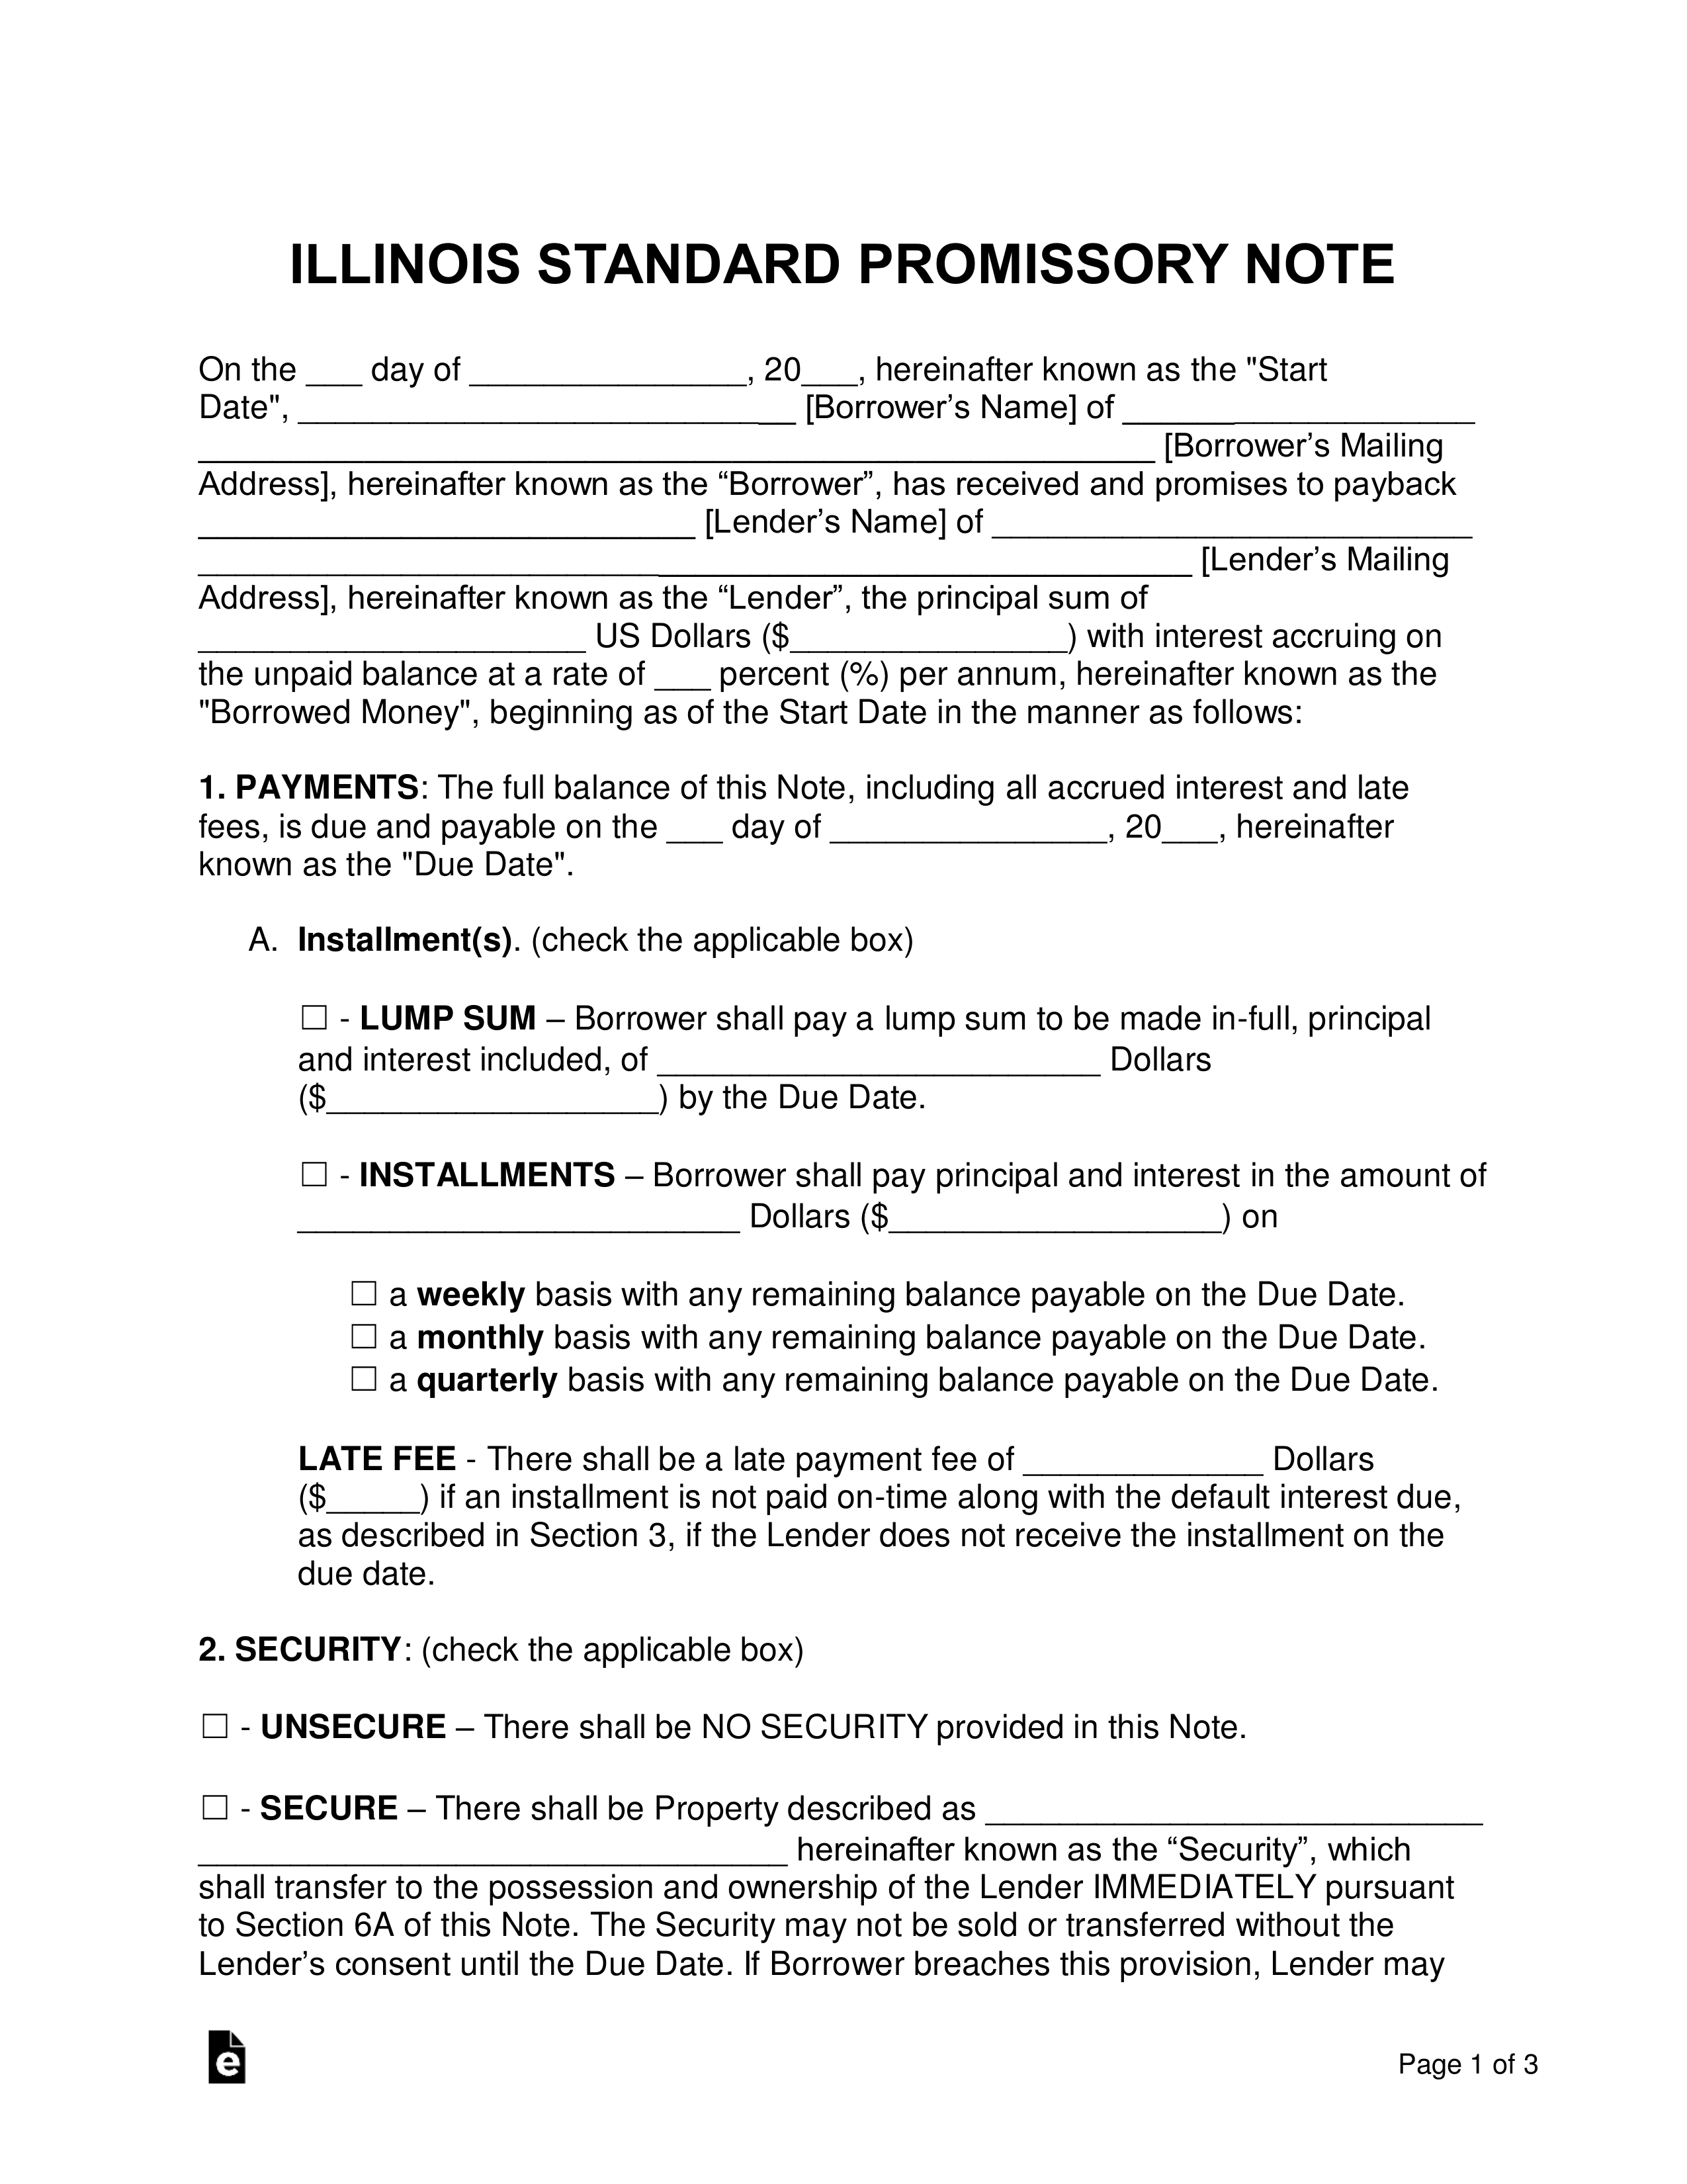 Illinois Promissory Note Templates (2)